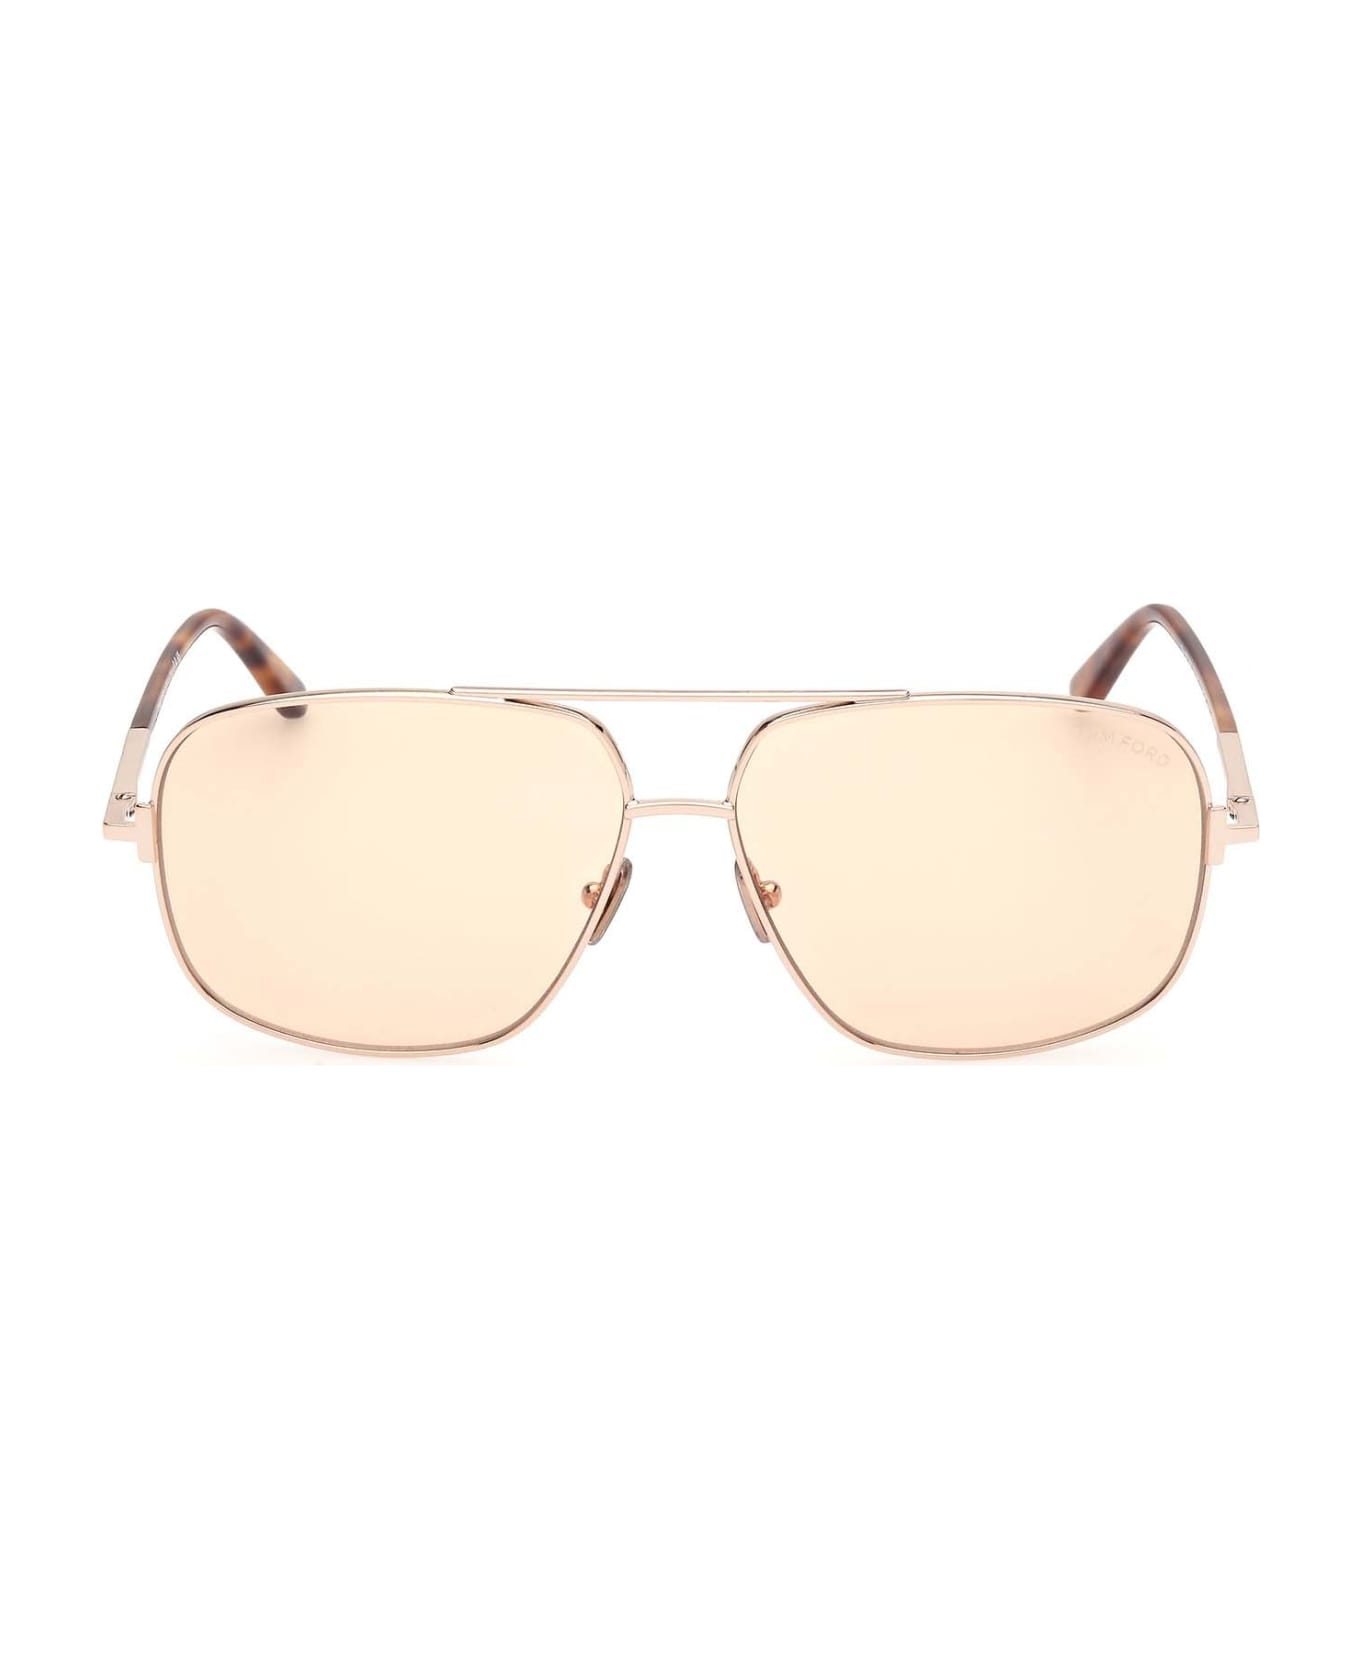 Tom Ford Eyewear Sunglasses - Oro/Marrone